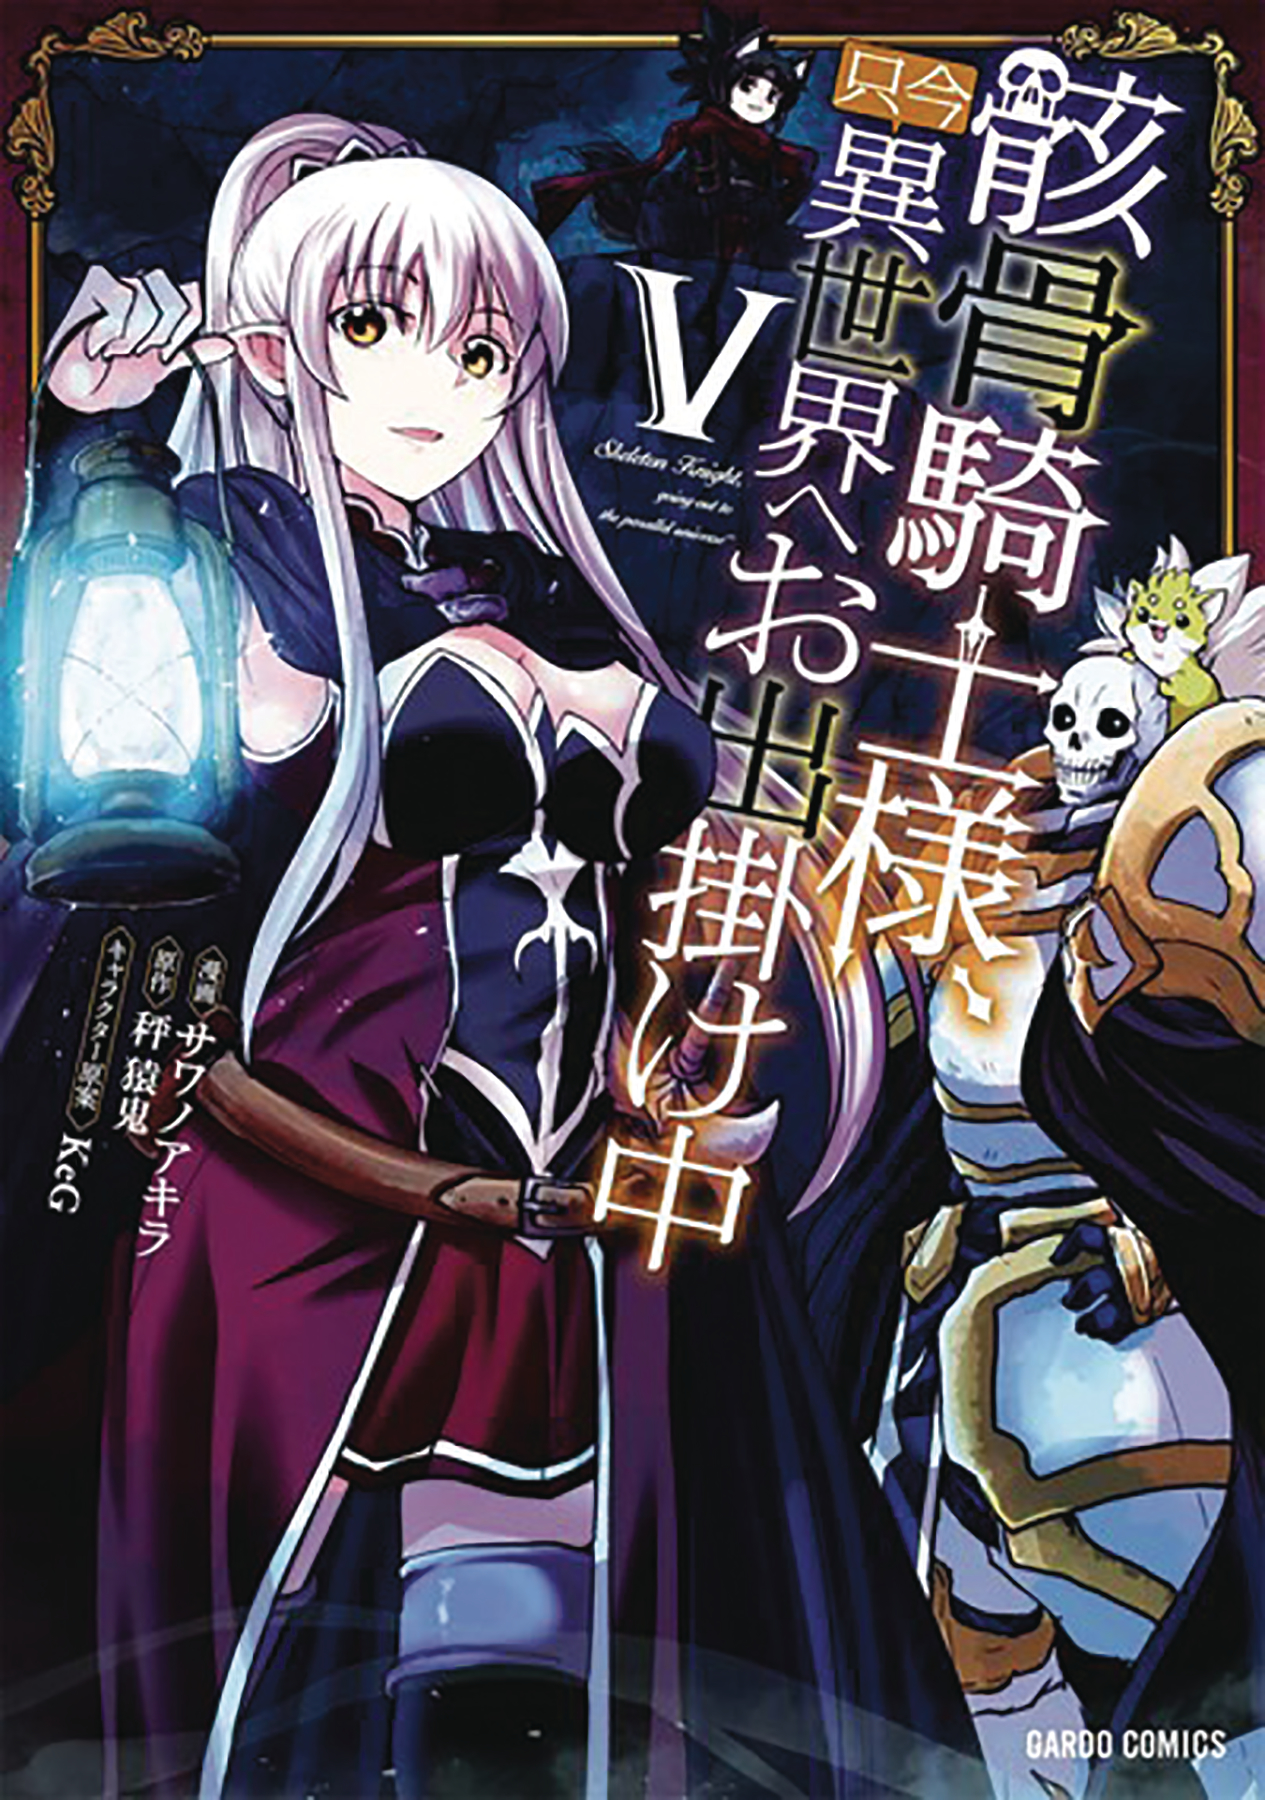 Skeleton Knight in Another World Manga Volume 5